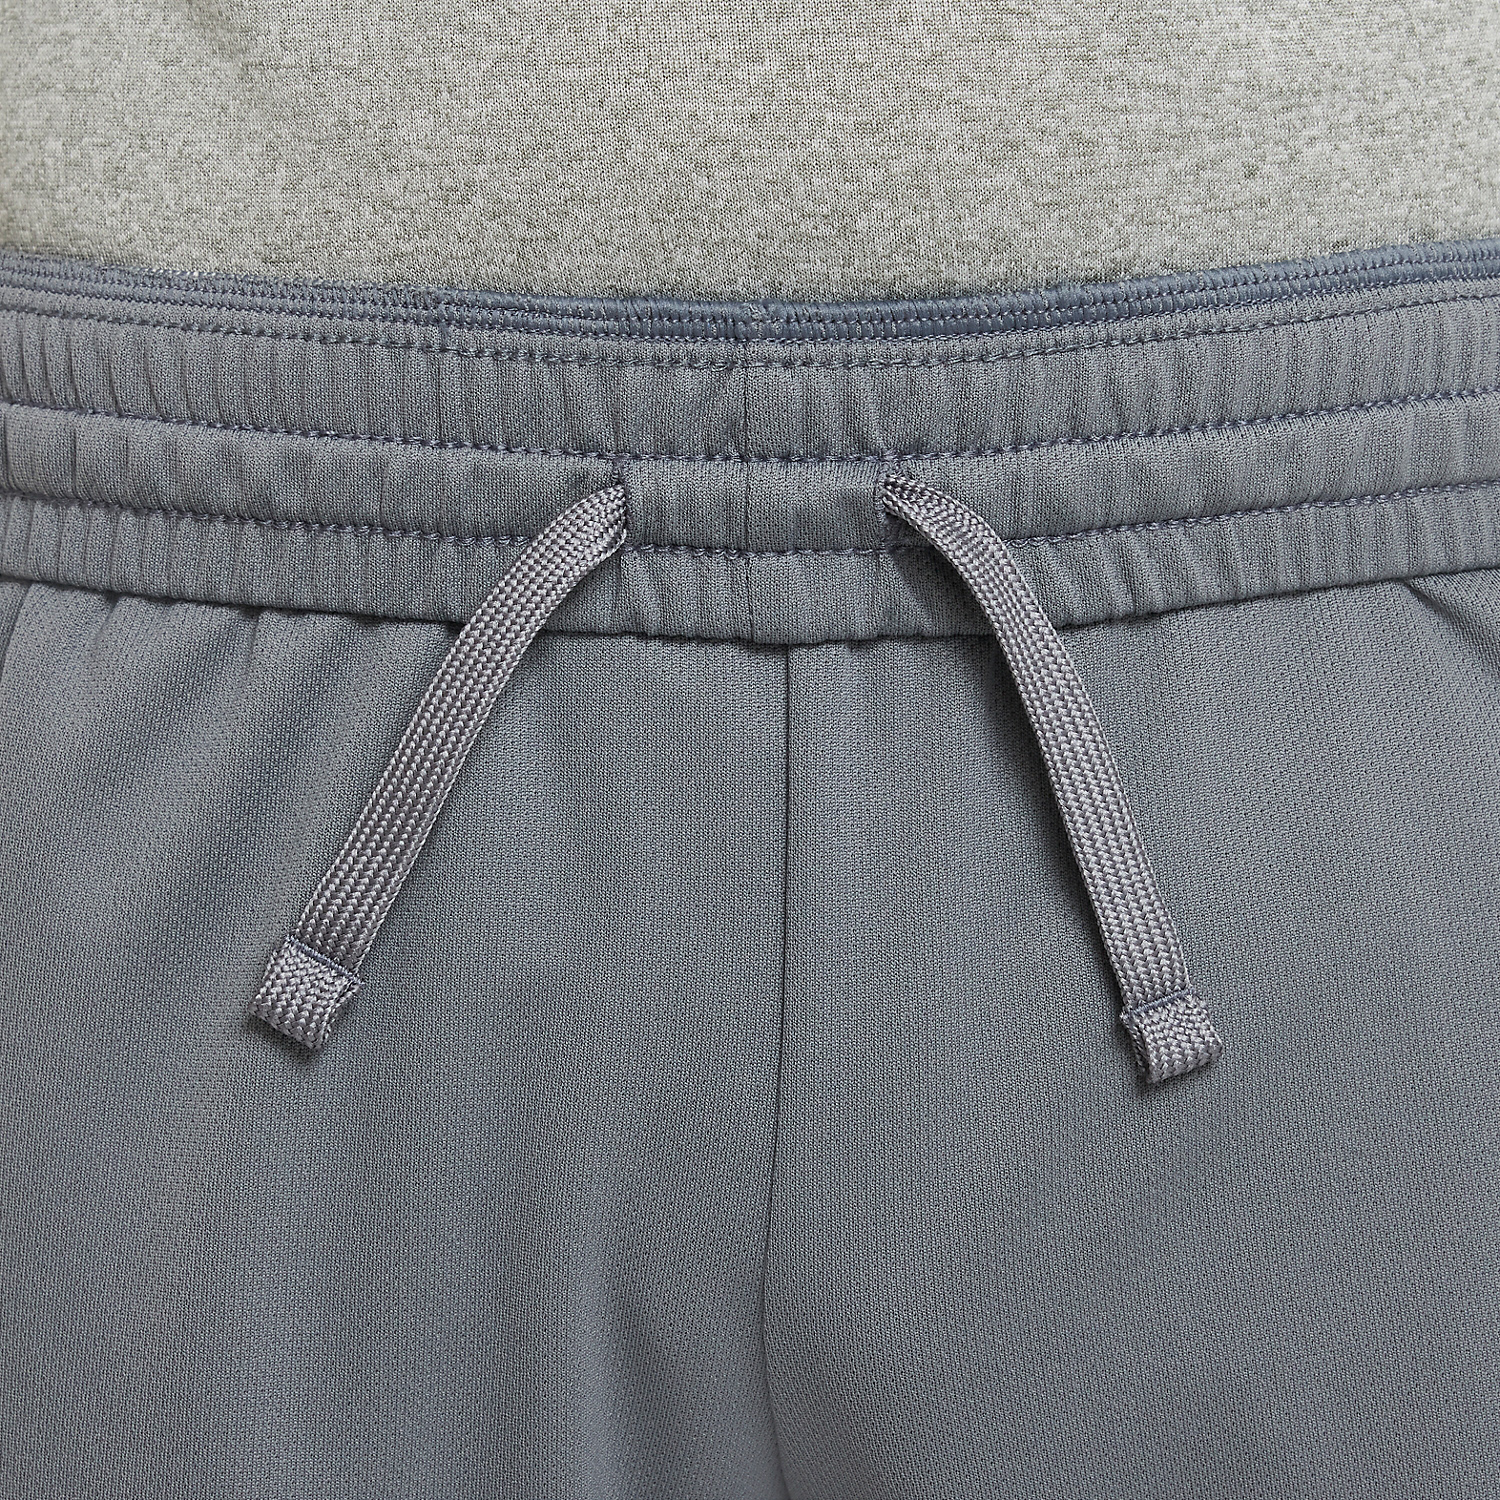 Nike Dri-FIT Multi+ 6in Pantaloncini Bambino - Smoke Grey/White